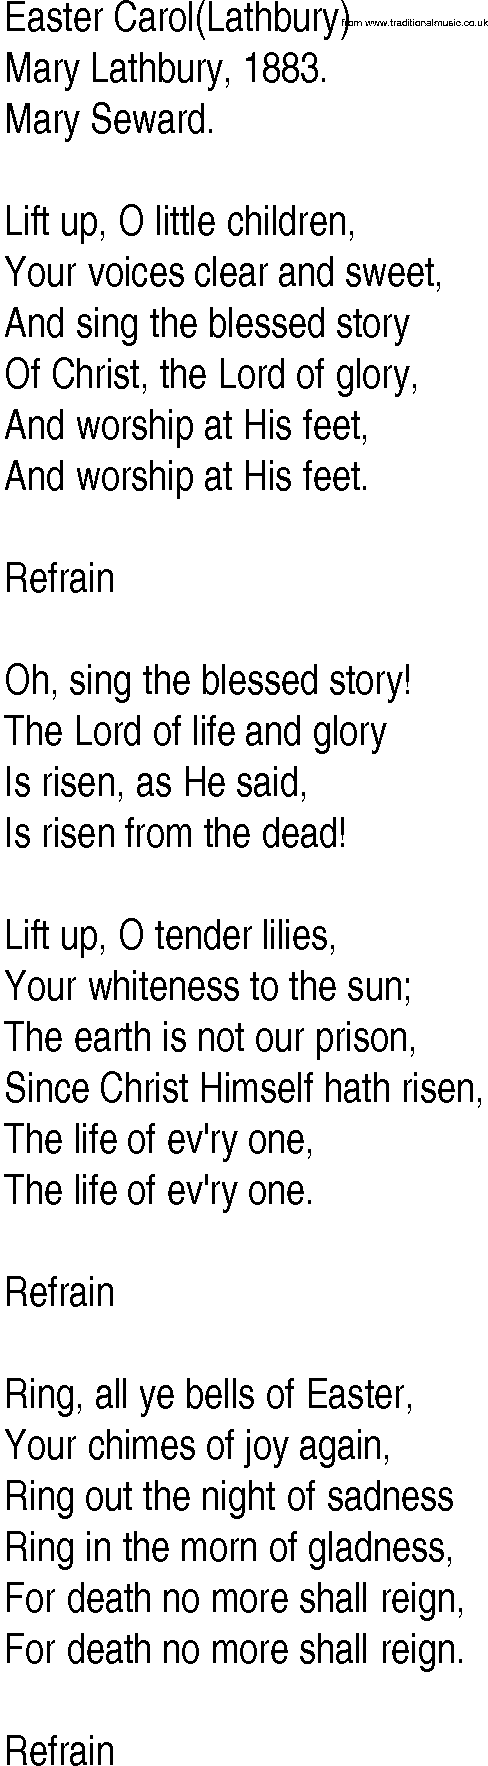 Hymn and Gospel Song: Easter Carol(Lathbury) by Mary Lathbury lyrics